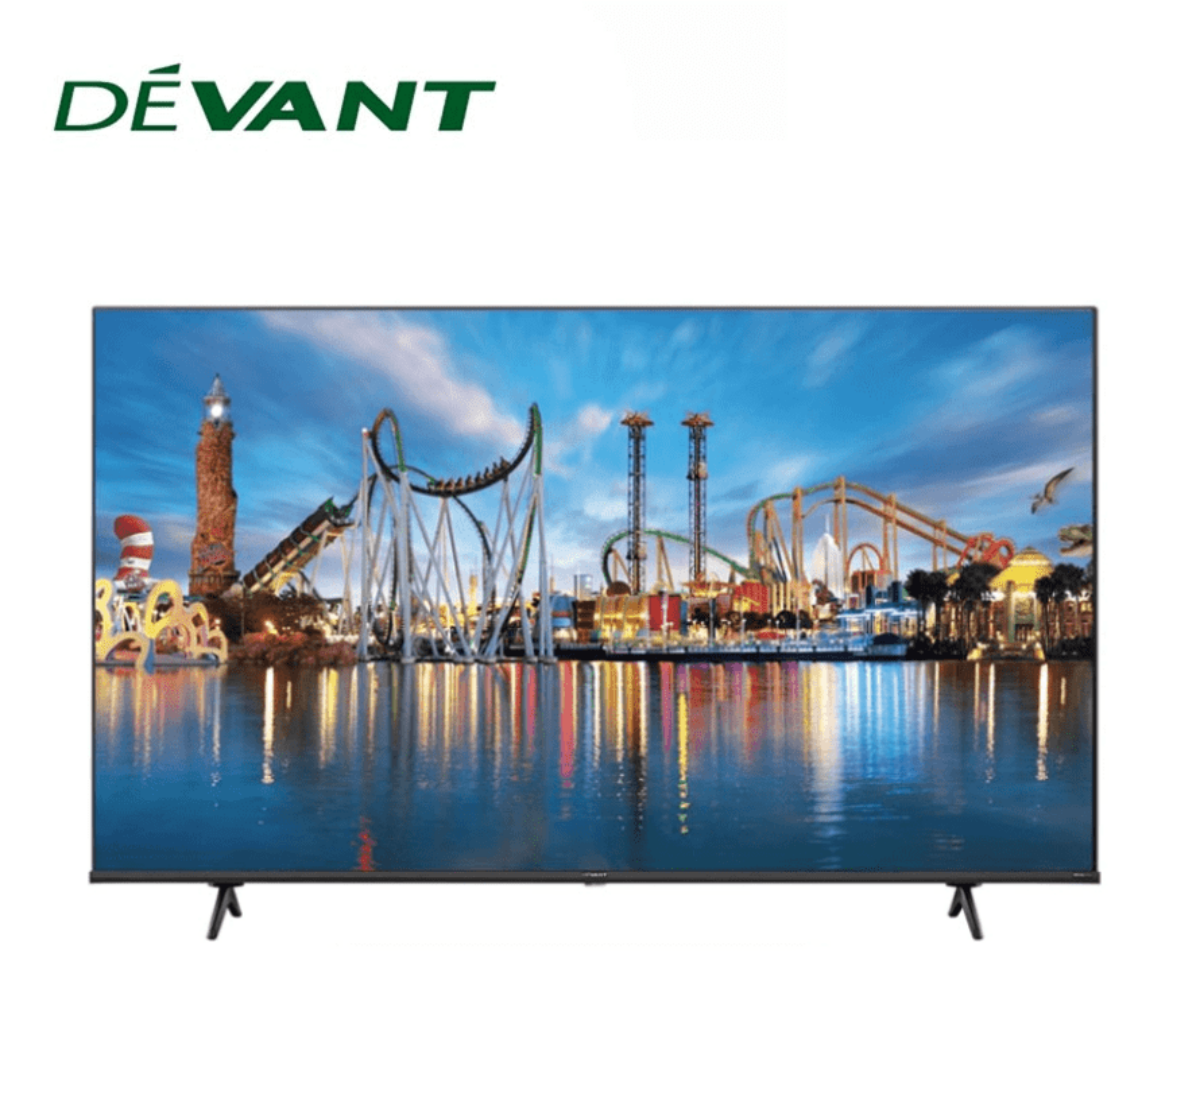 DEVANT 75UHD204 Smart 4K TV Devant